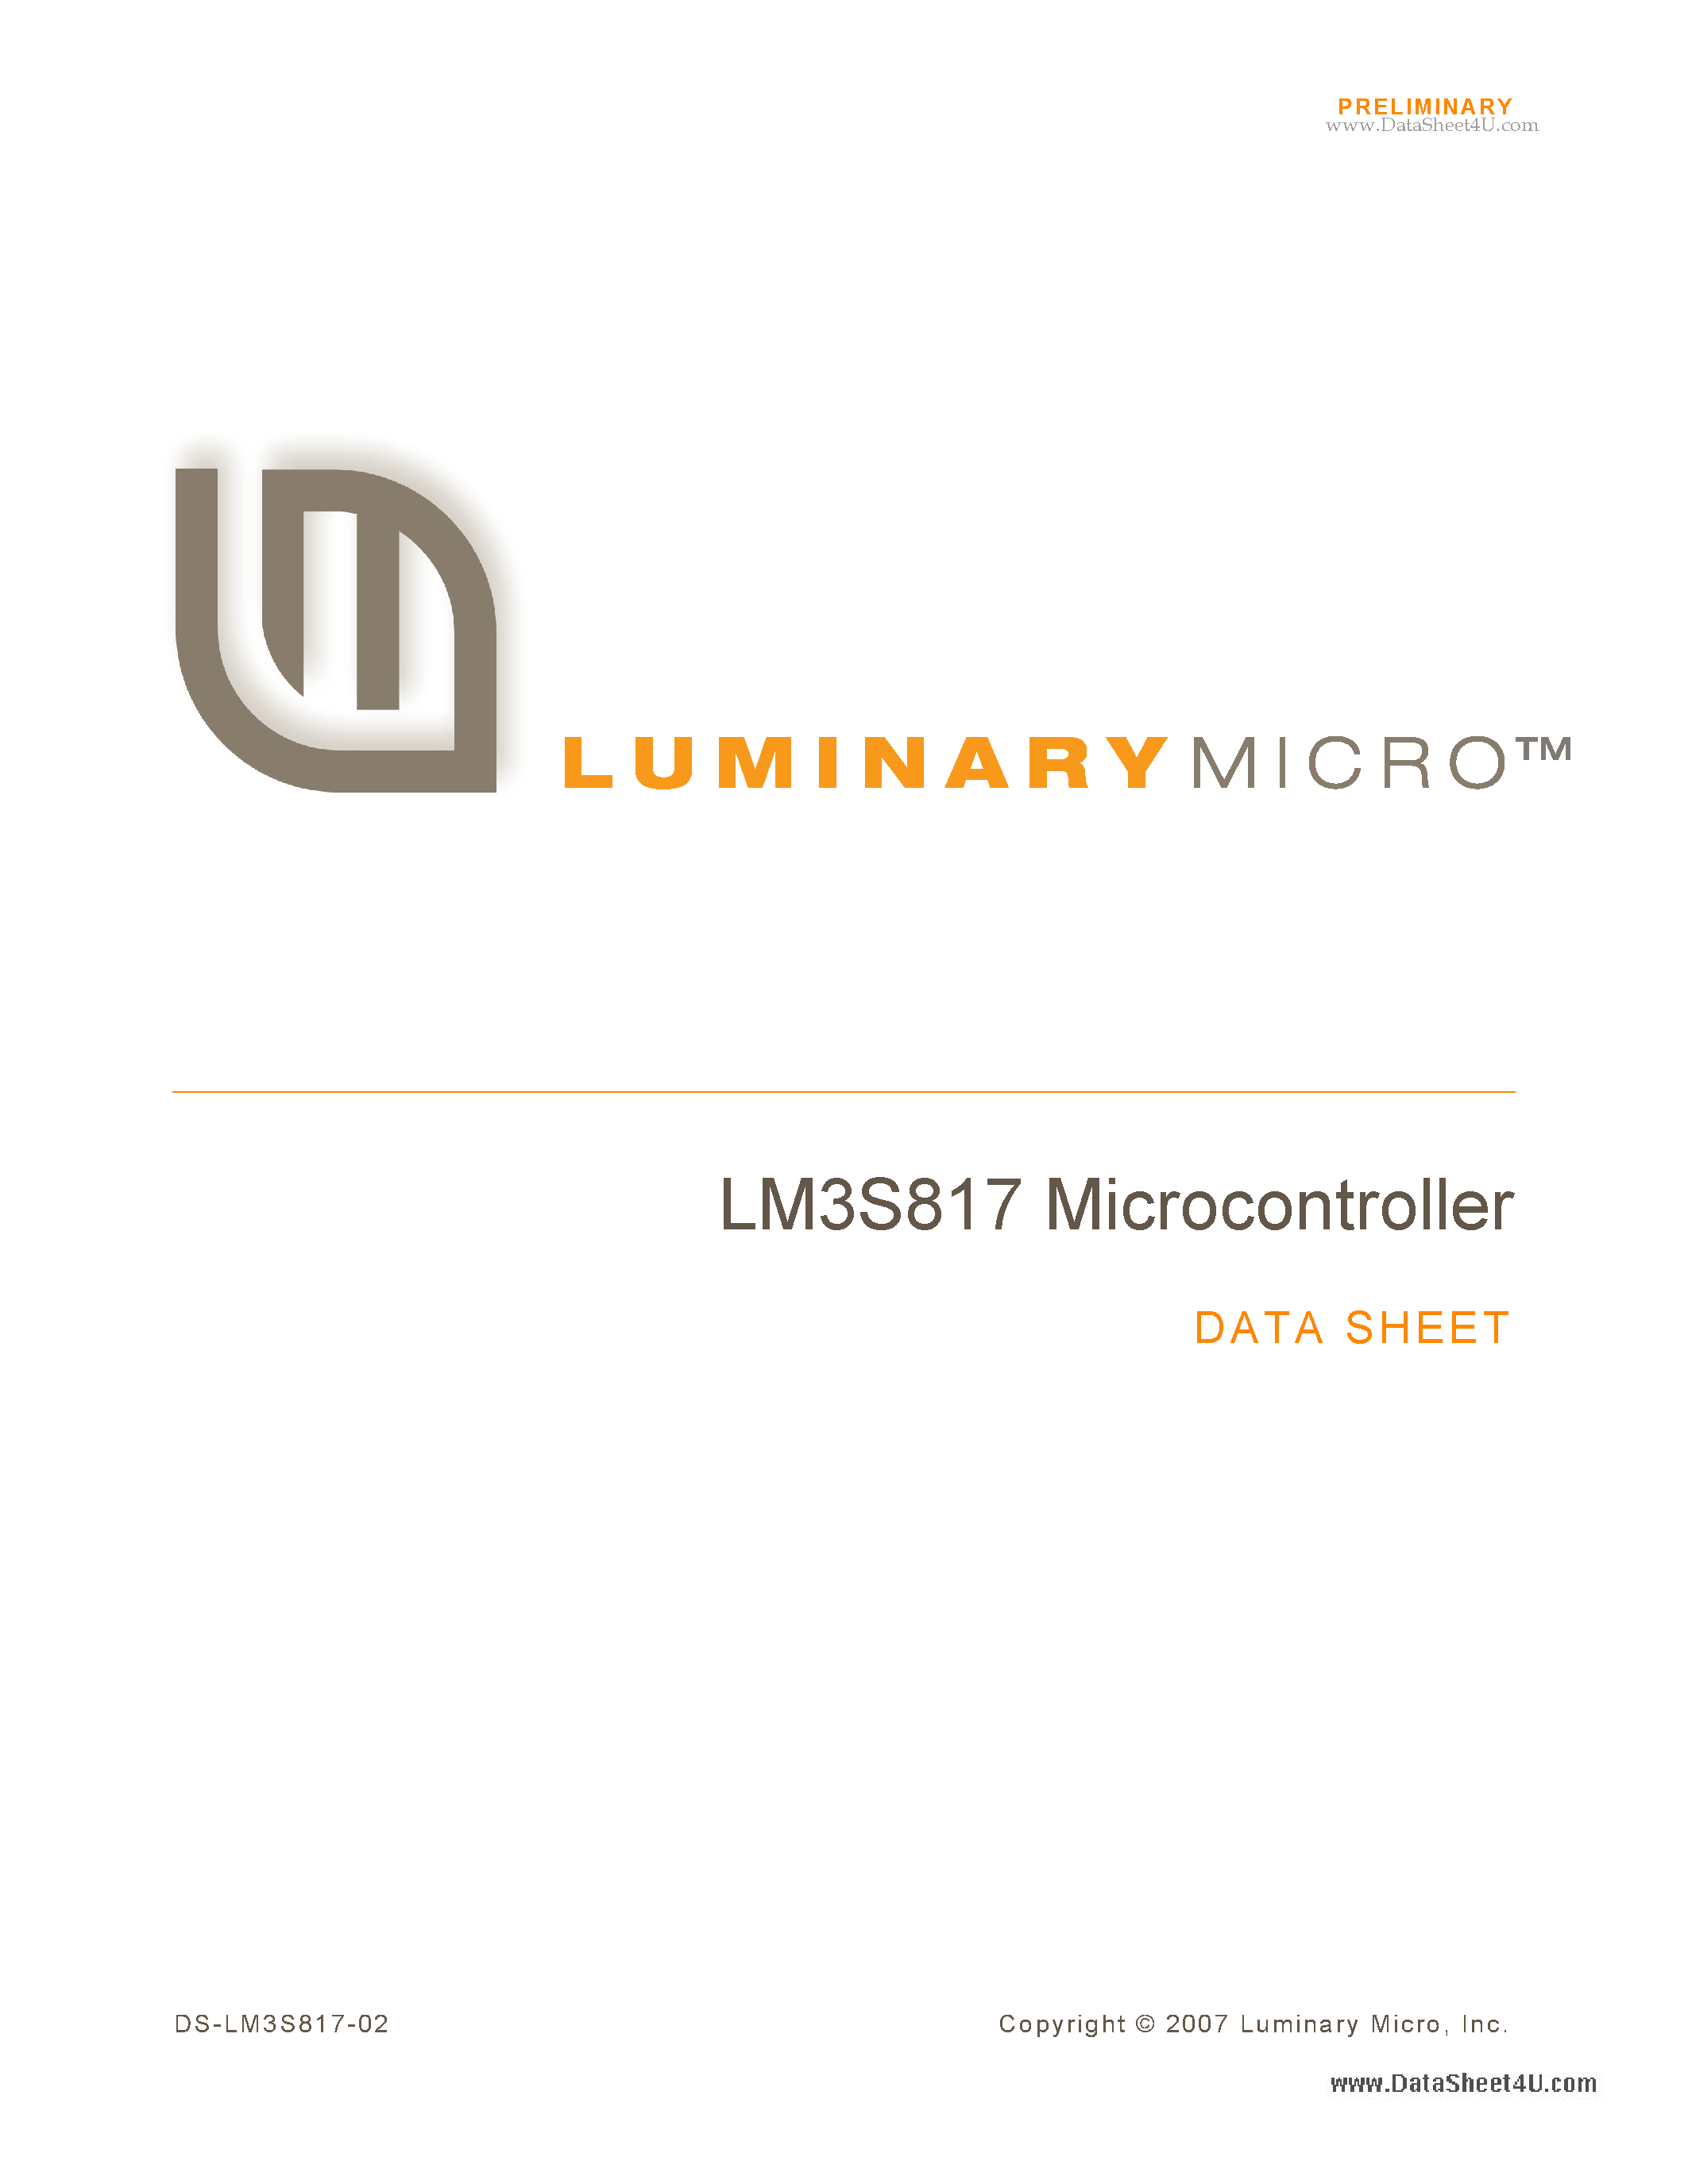 Даташит LM3S817 - Microcontroller страница 1